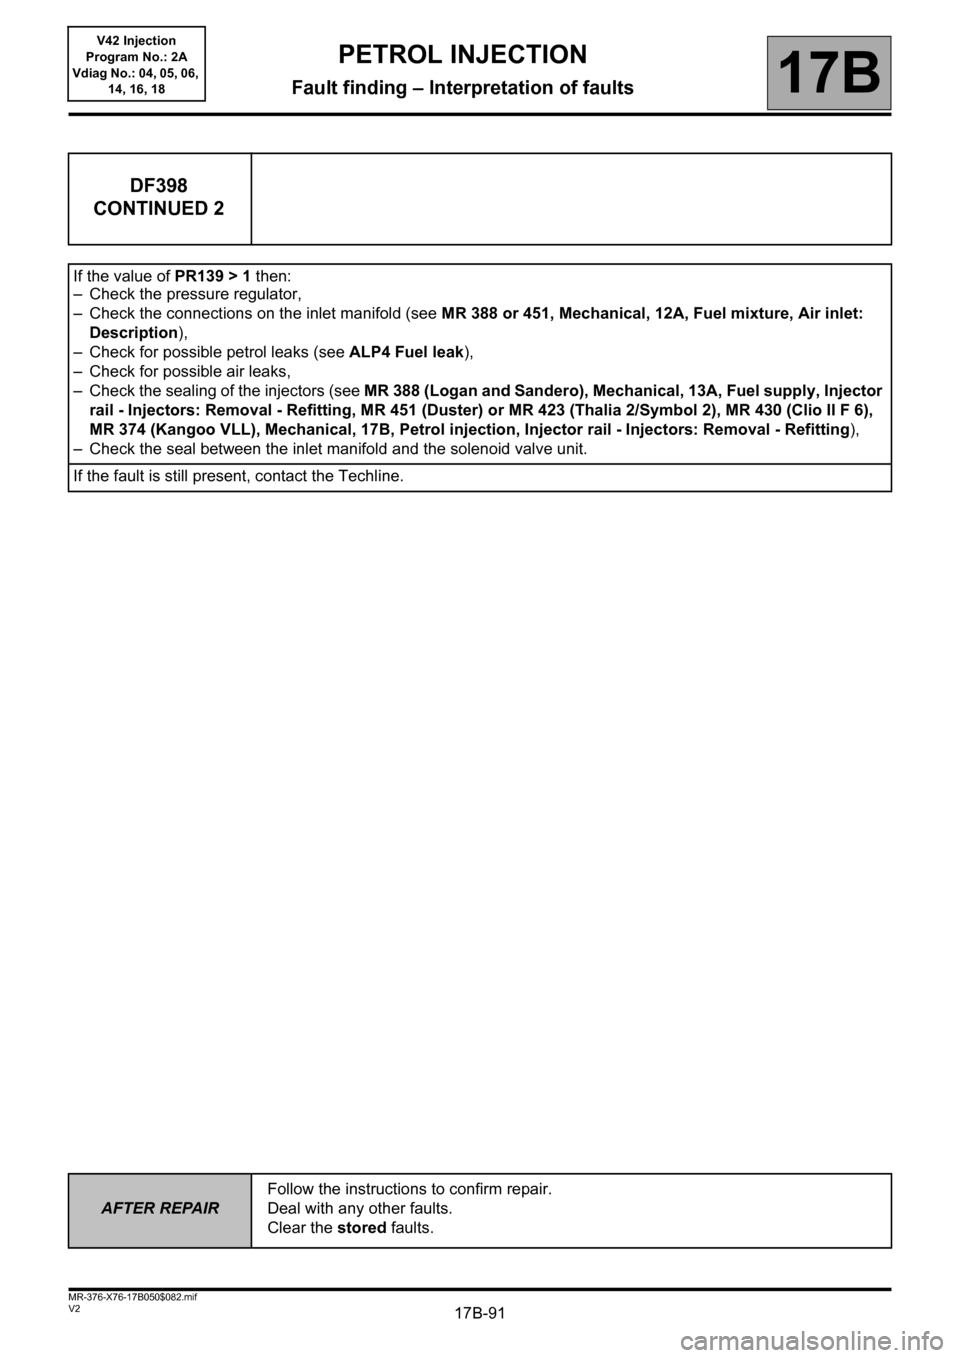 RENAULT KANGOO 2013 X61 / 2.G Petrol V42 Injection Workshop Manual 17B-91V2 MR-376-X76-17B050$082.mif
PETROL INJECTION
Fault finding – Interpretation of faults17B
V42 Injection
Program No.: 2A
Vdiag No.: 04, 05, 06, 
14, 16, 18
AFTER REPAIRFollow the instructions t